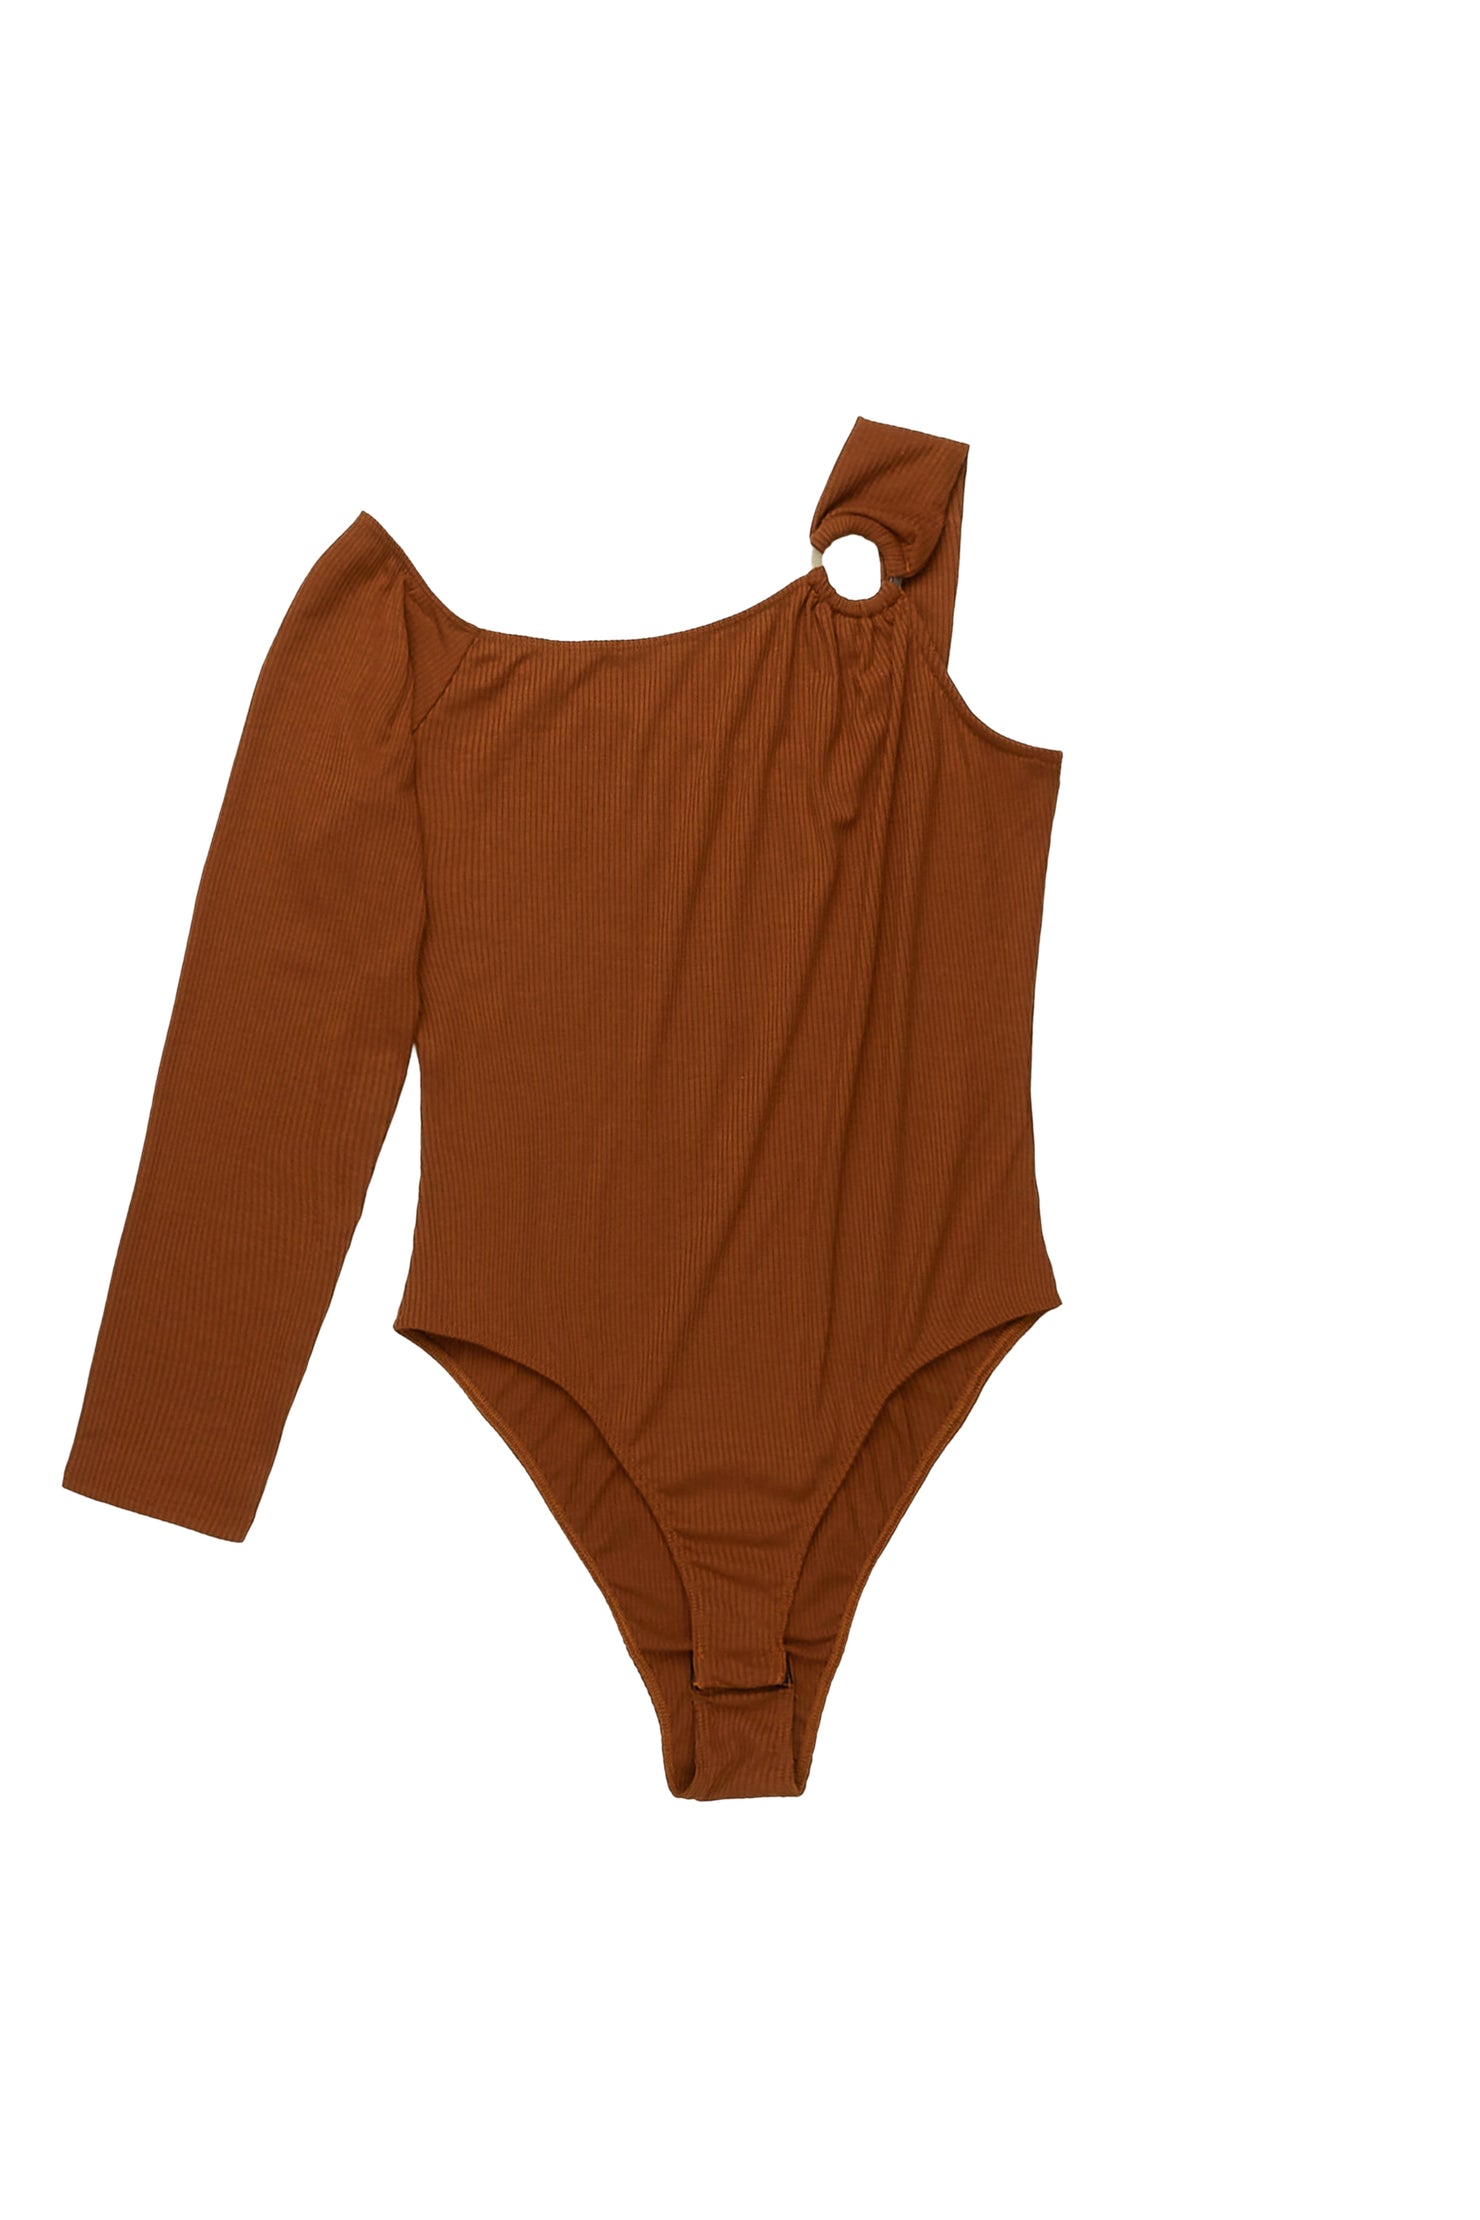 Kaley-C Bodysuit-Brown